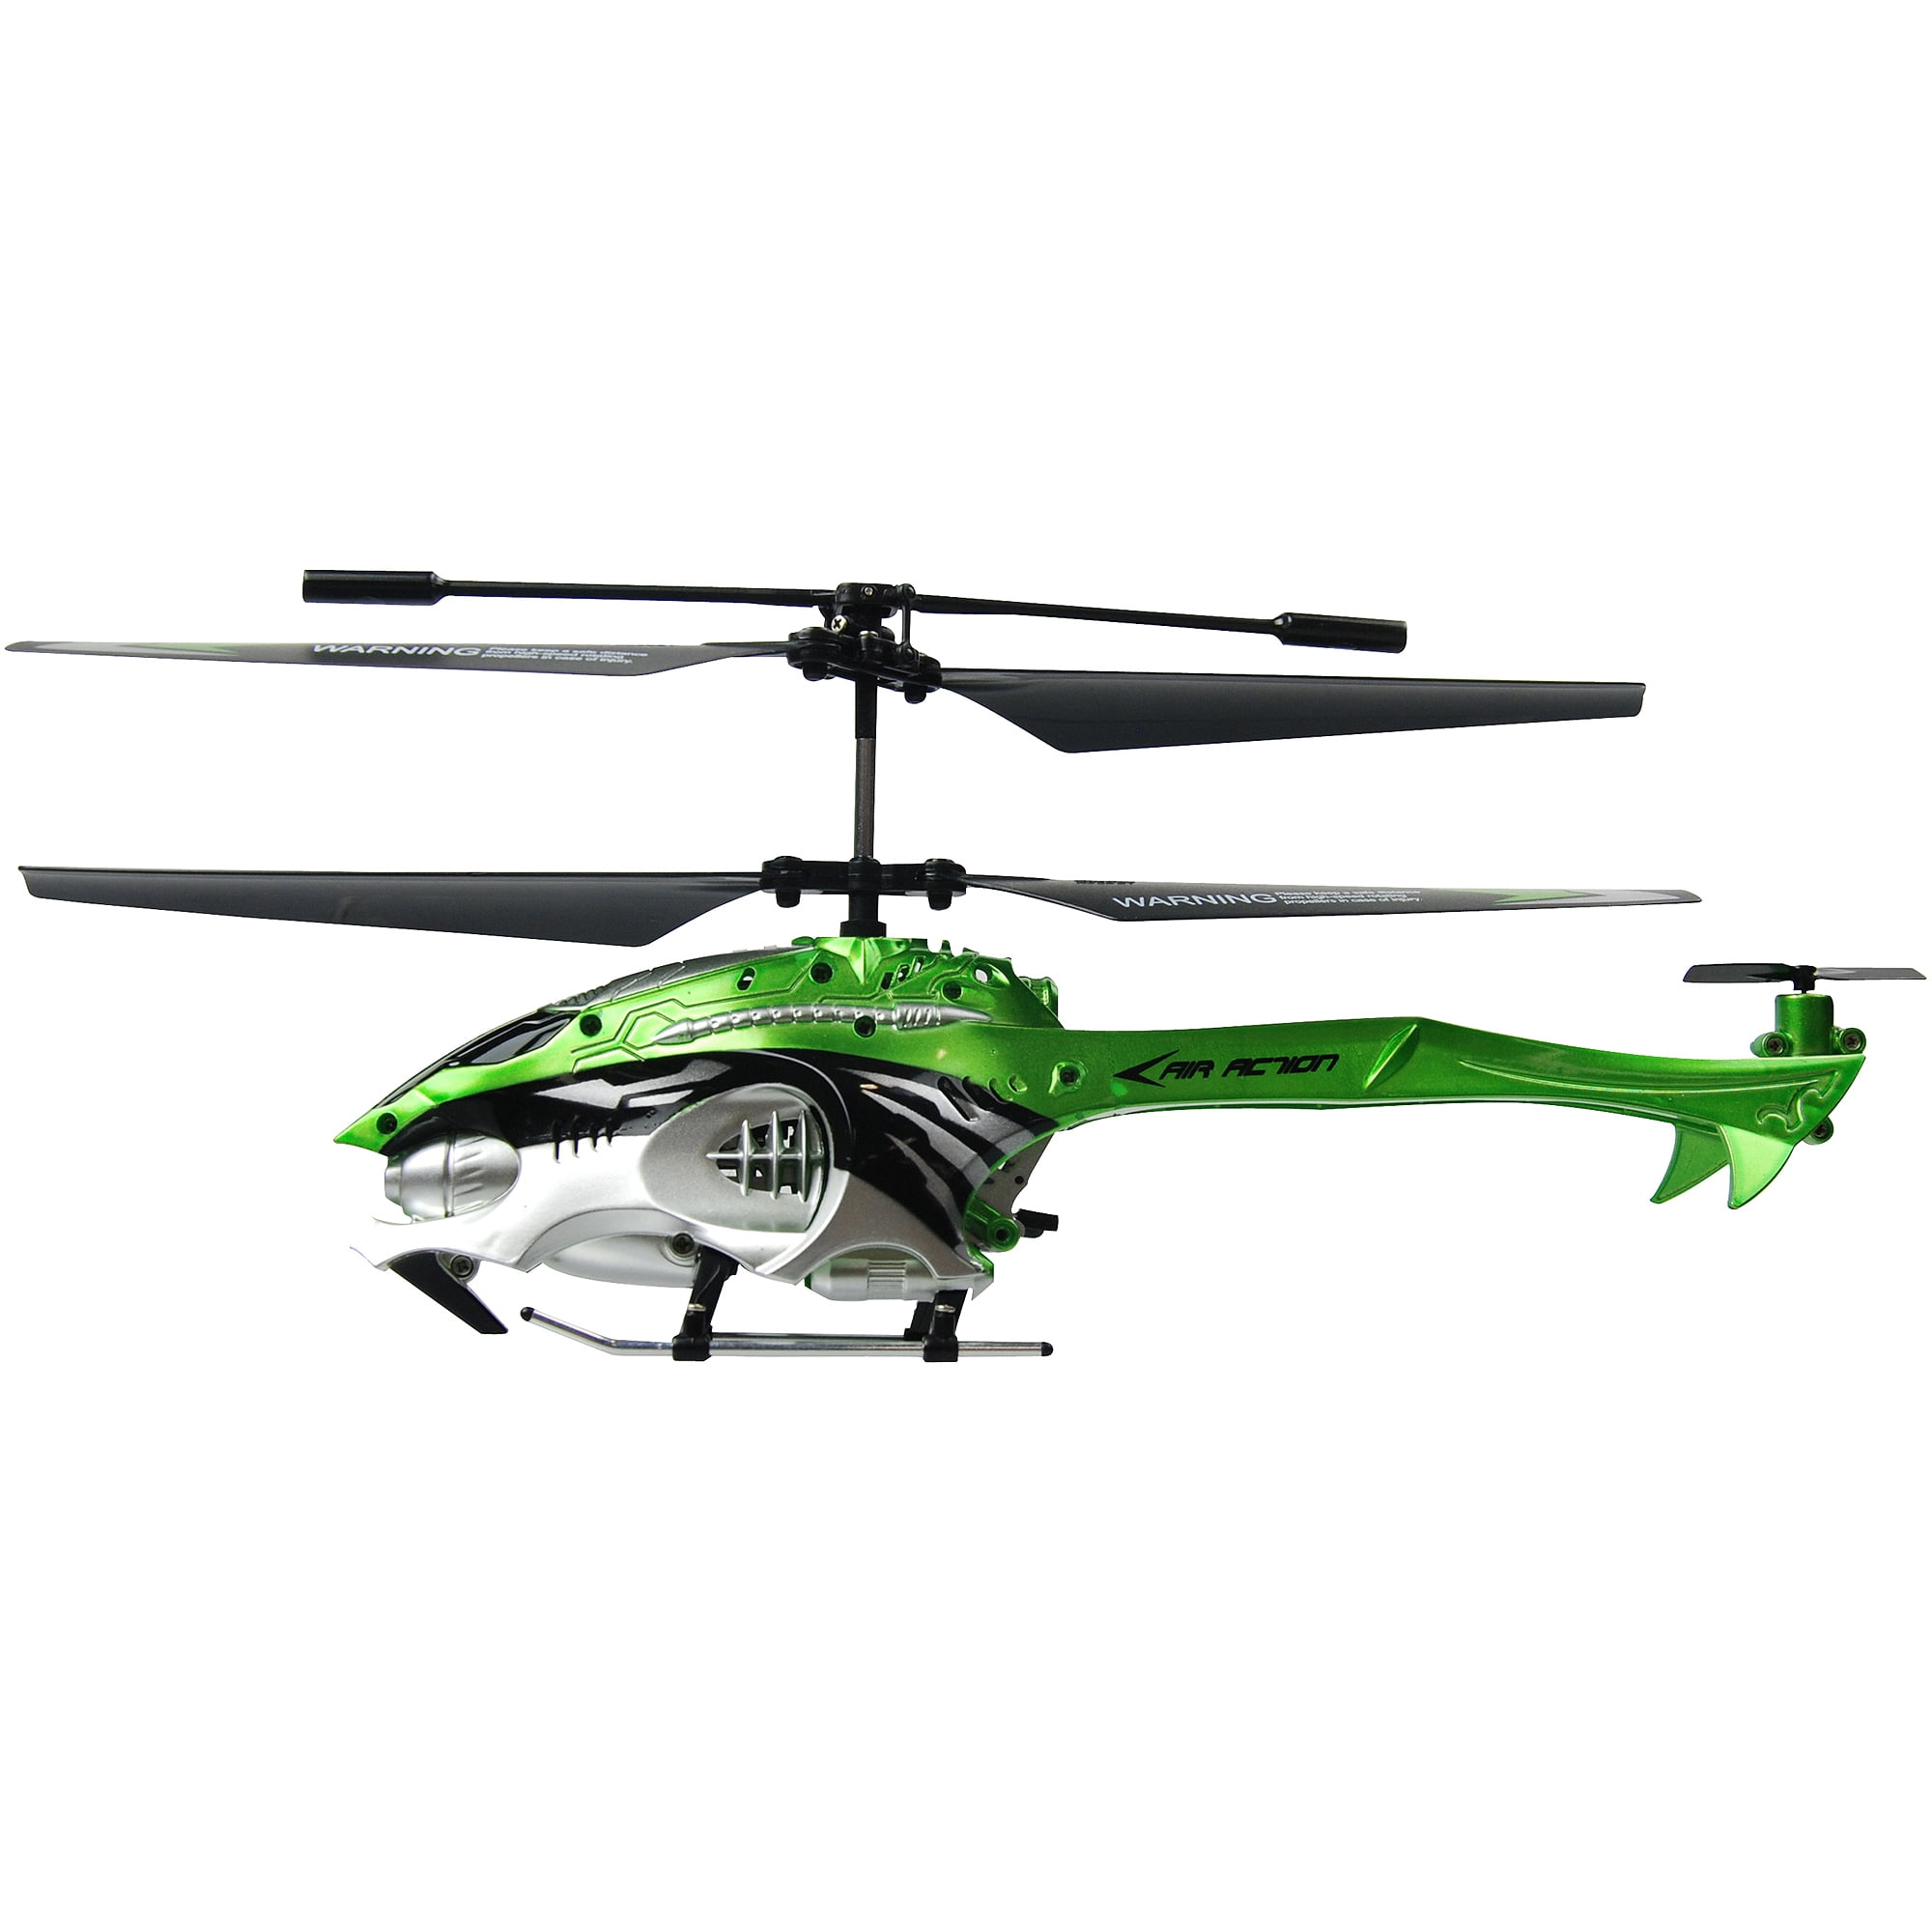 Jamara Landing Gear for 2.4GHz Gyro V2 Helicopter